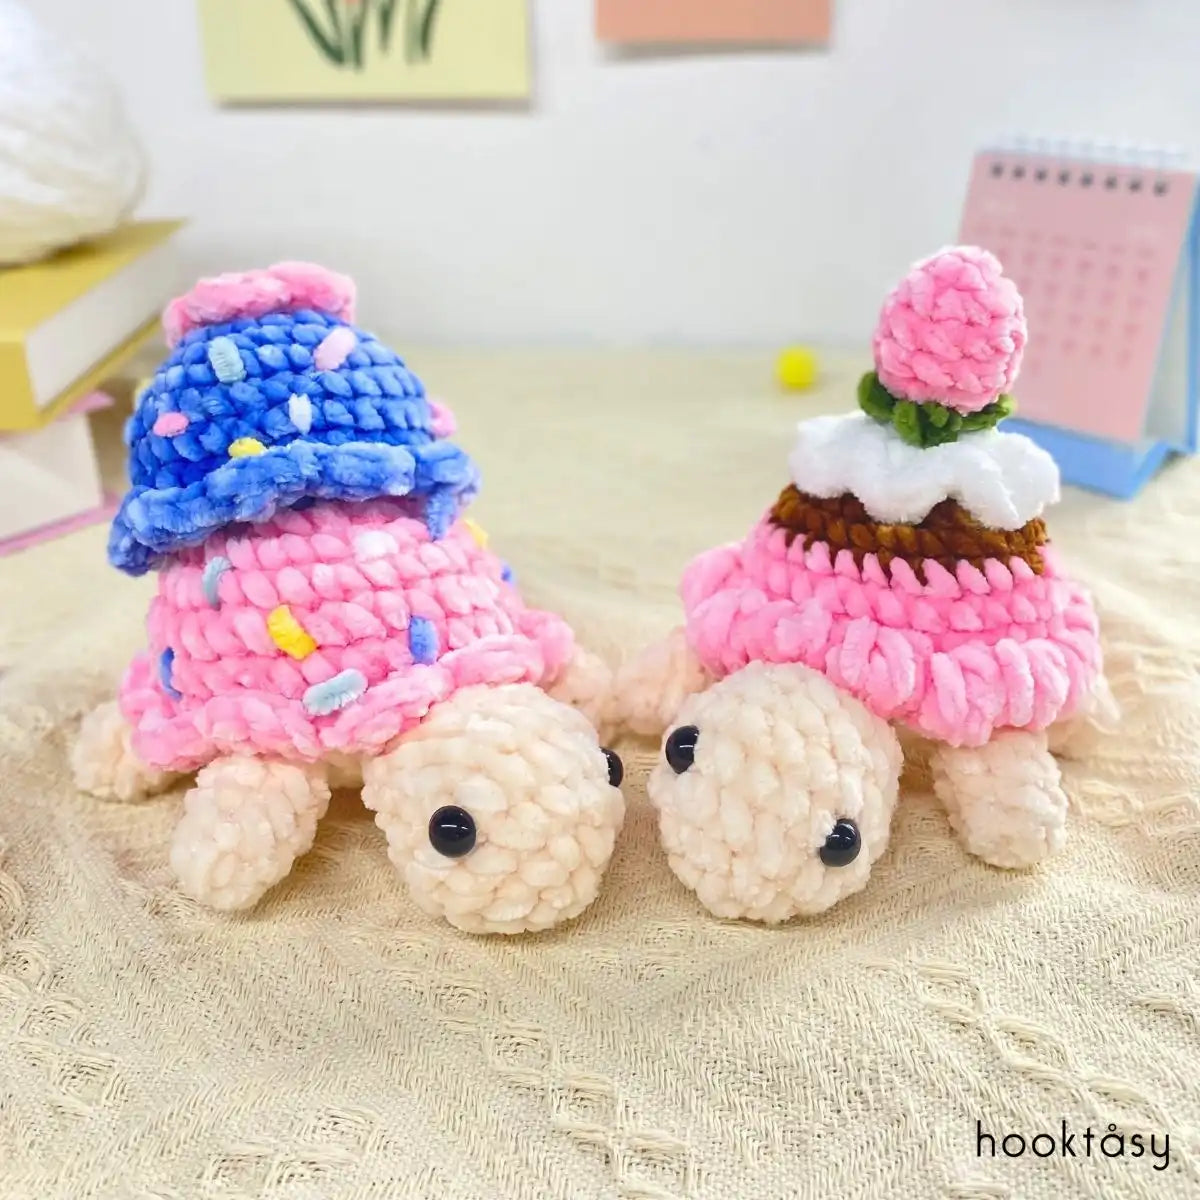 Turtle Bundle Crochet Patterns: 7 Adorable Designs - Hooktasy